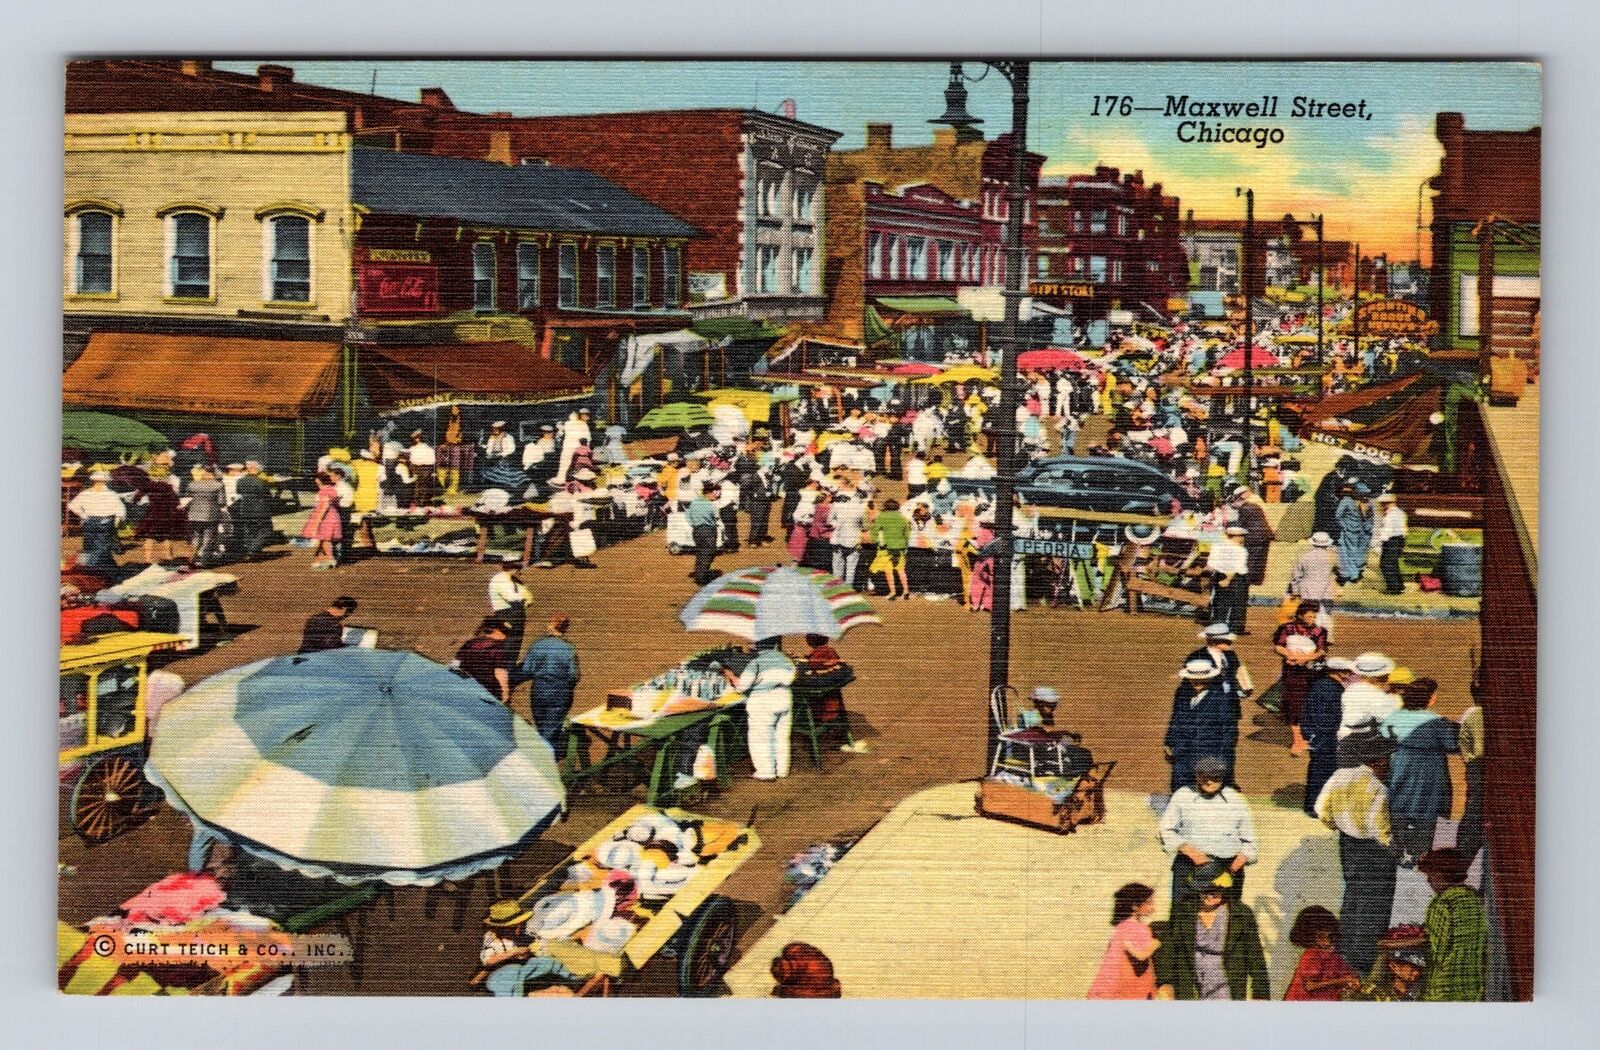 Chicago IL-Illinois, Maxwell Street, Ghetto Market Antique, Vintage Postcard